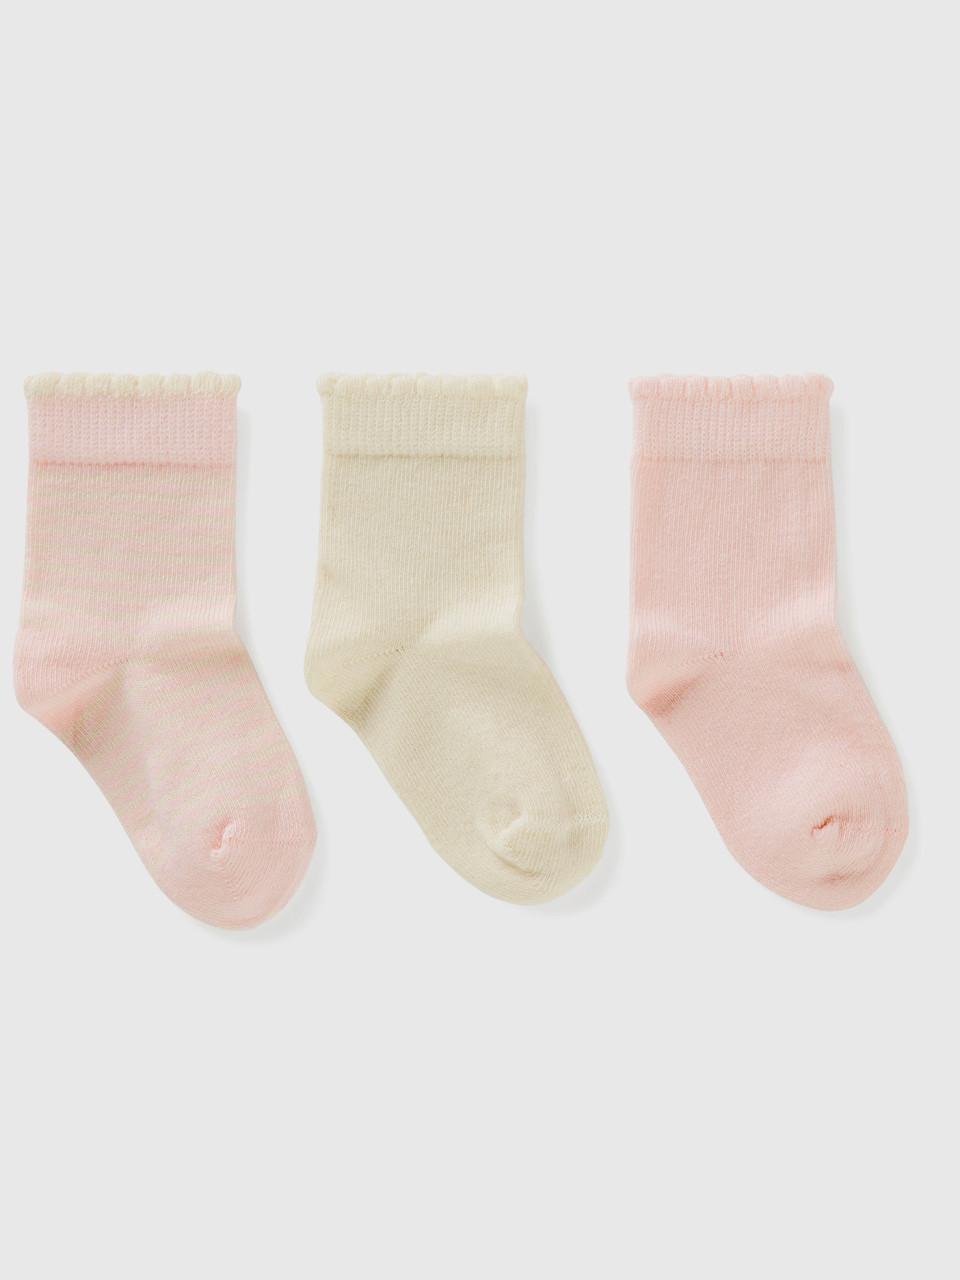 Benetton, Sock Set In Pink Tones, Multi-color, Kids